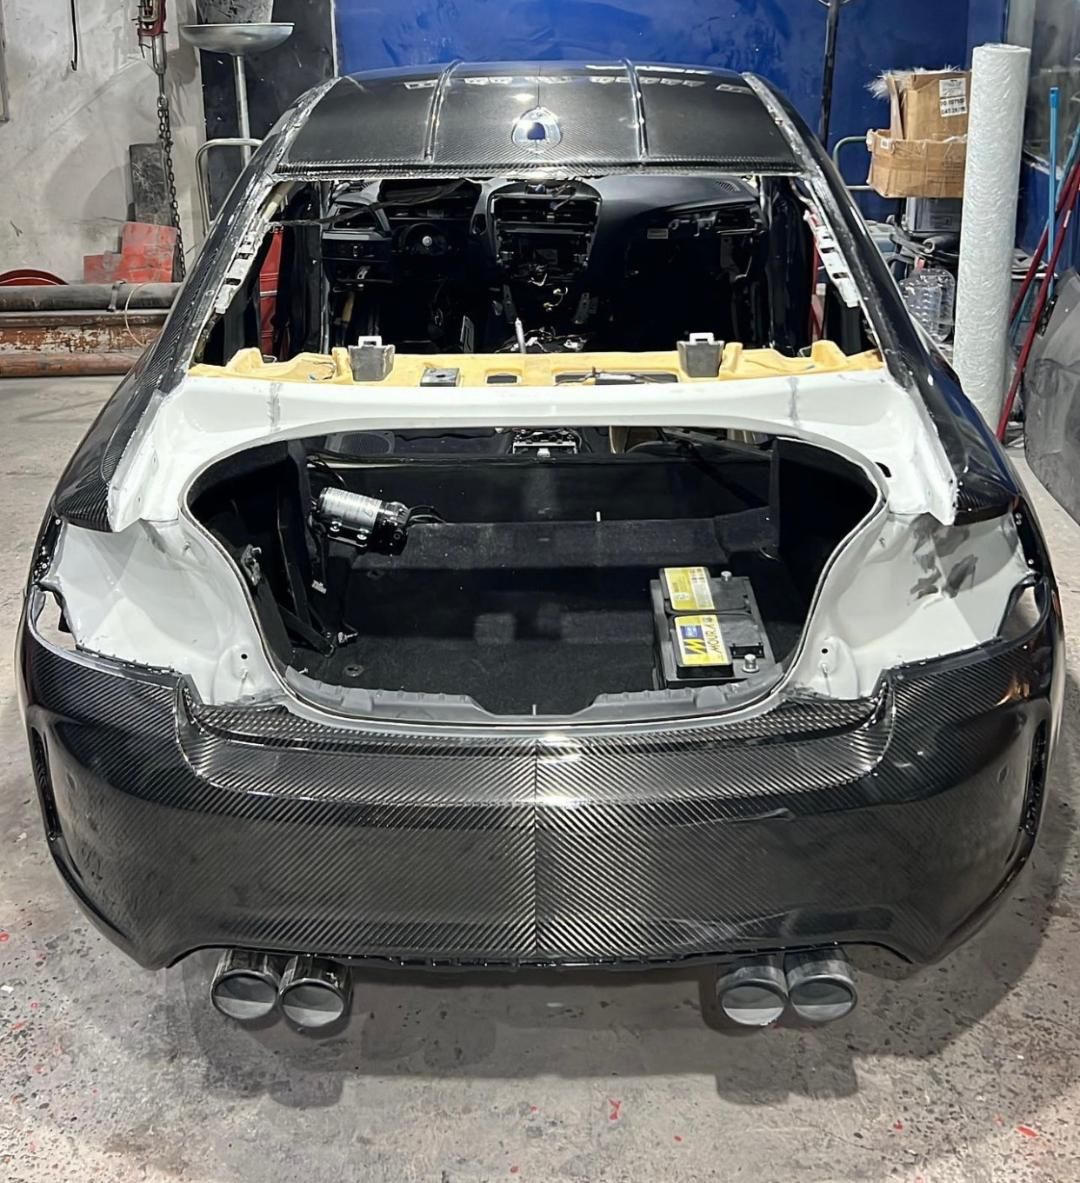 BMW M2 F87 carbon body panels